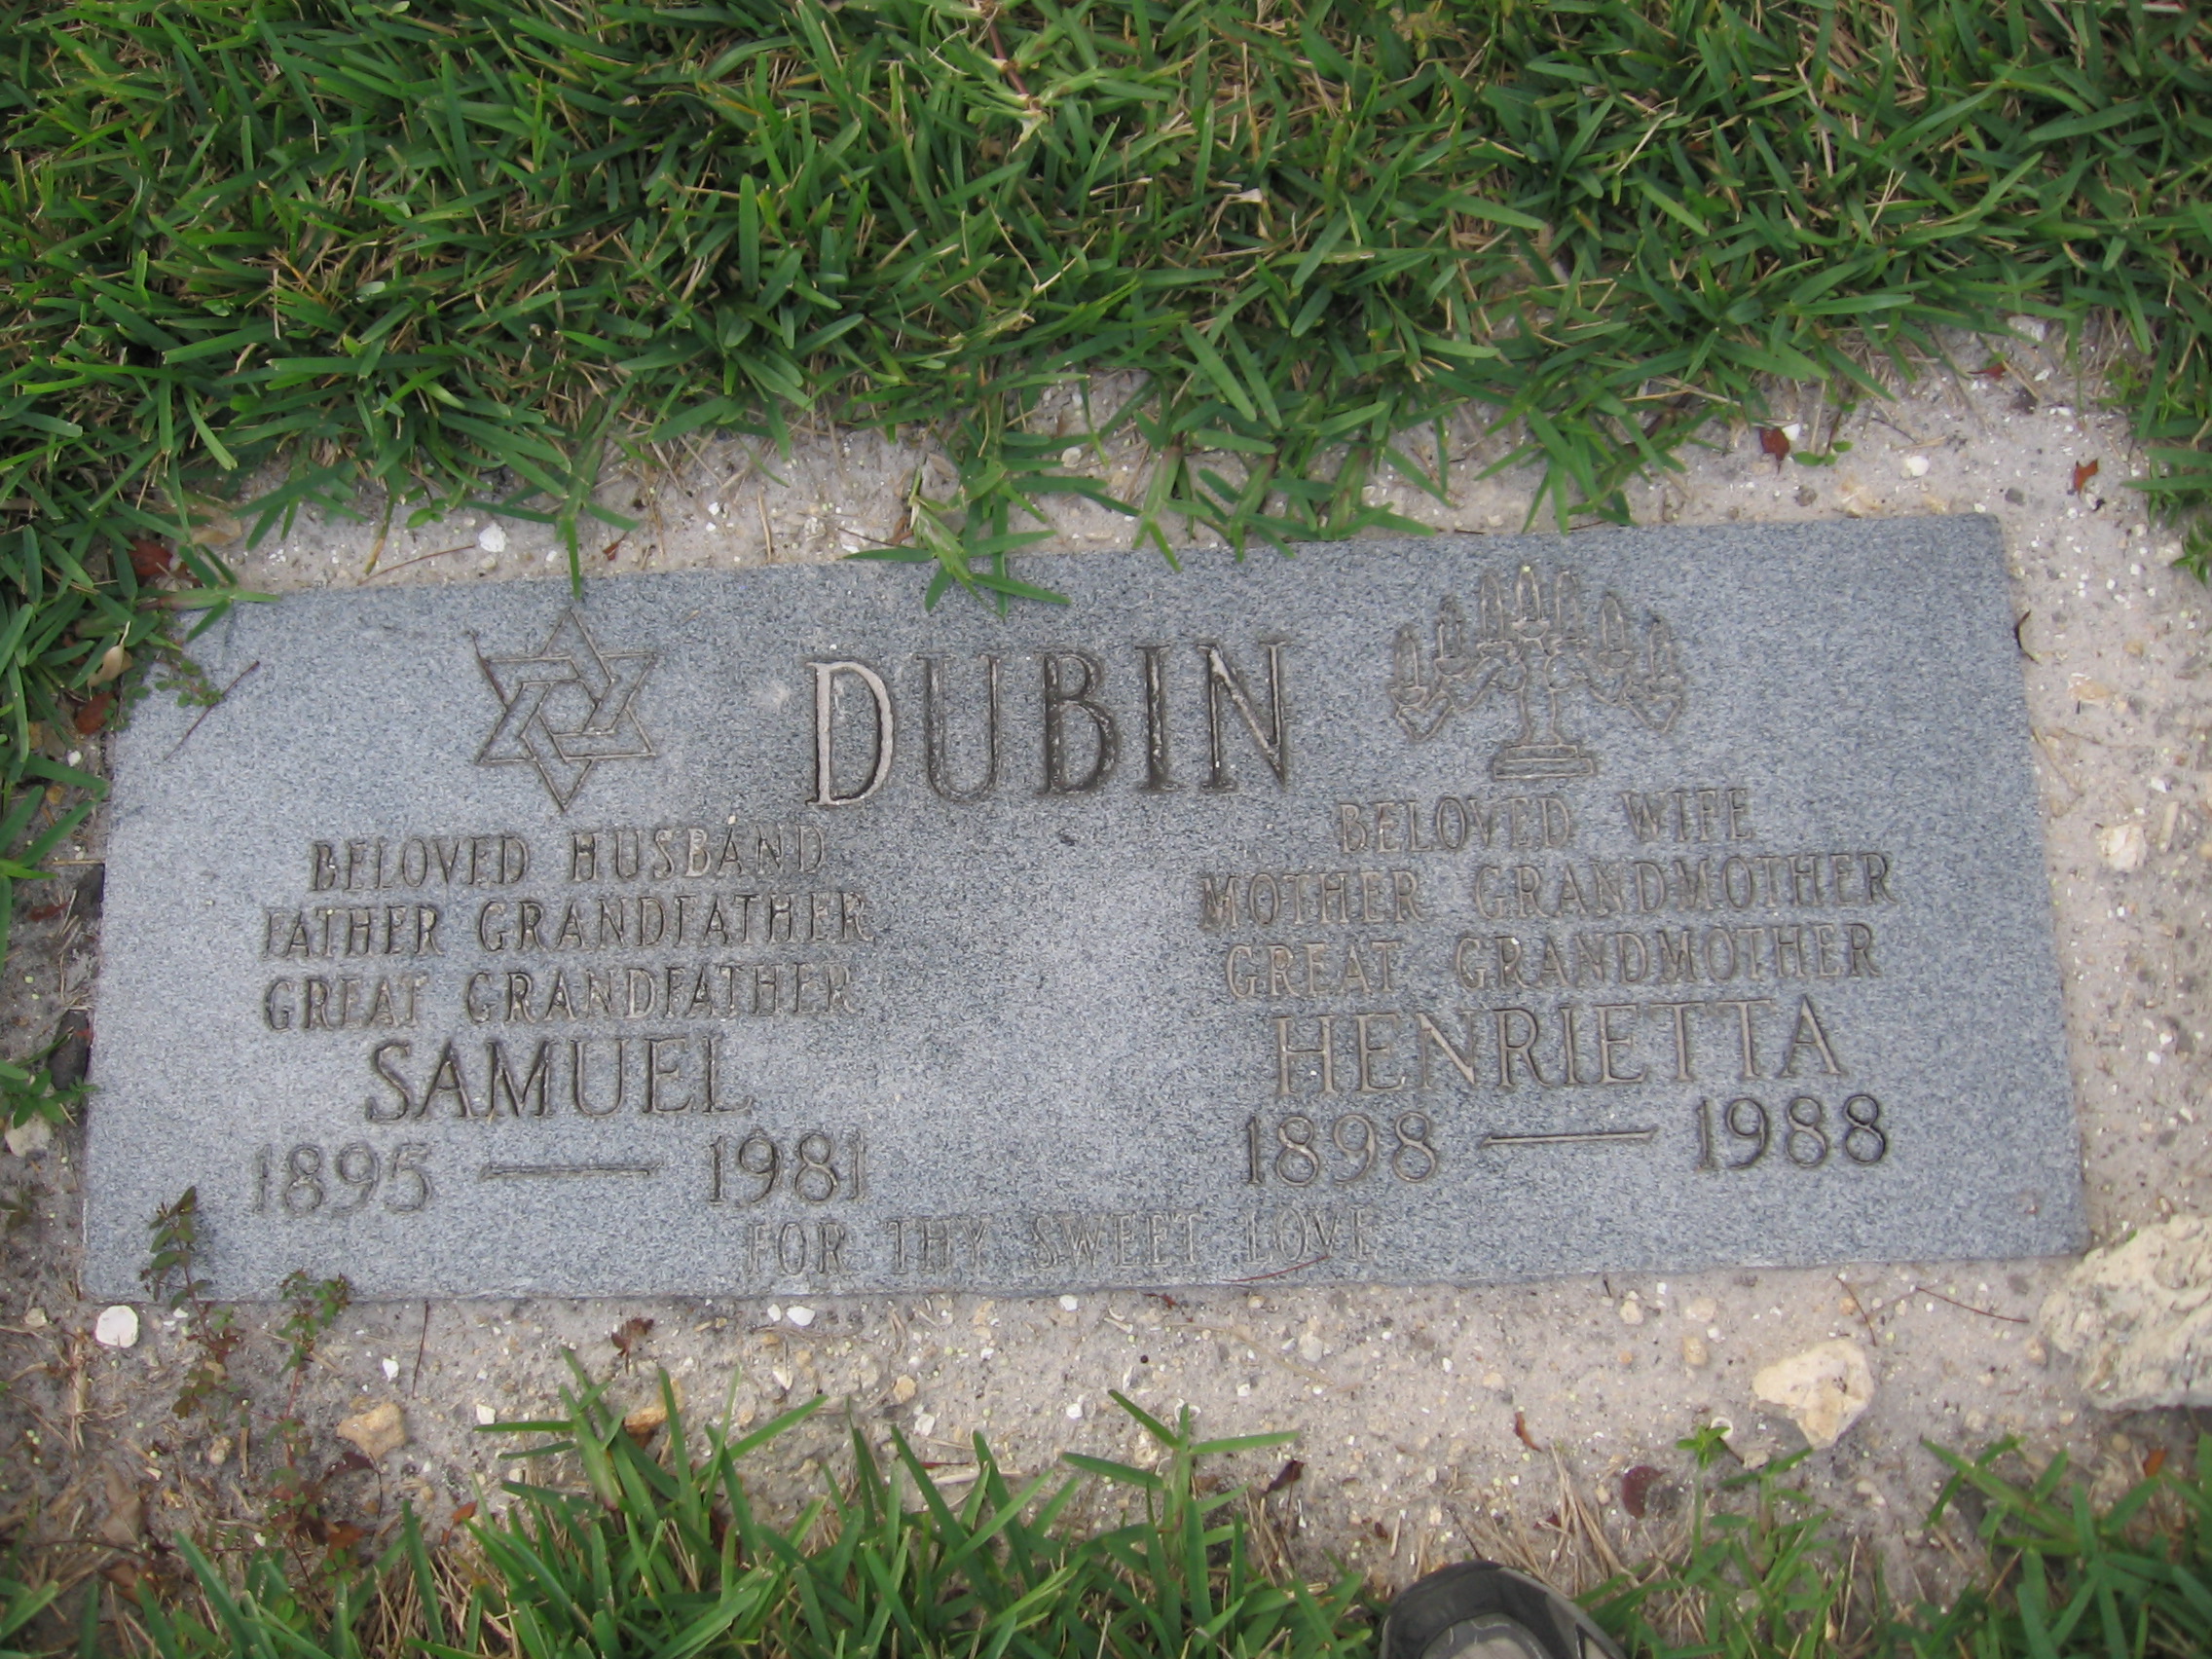 Samuel Dubin